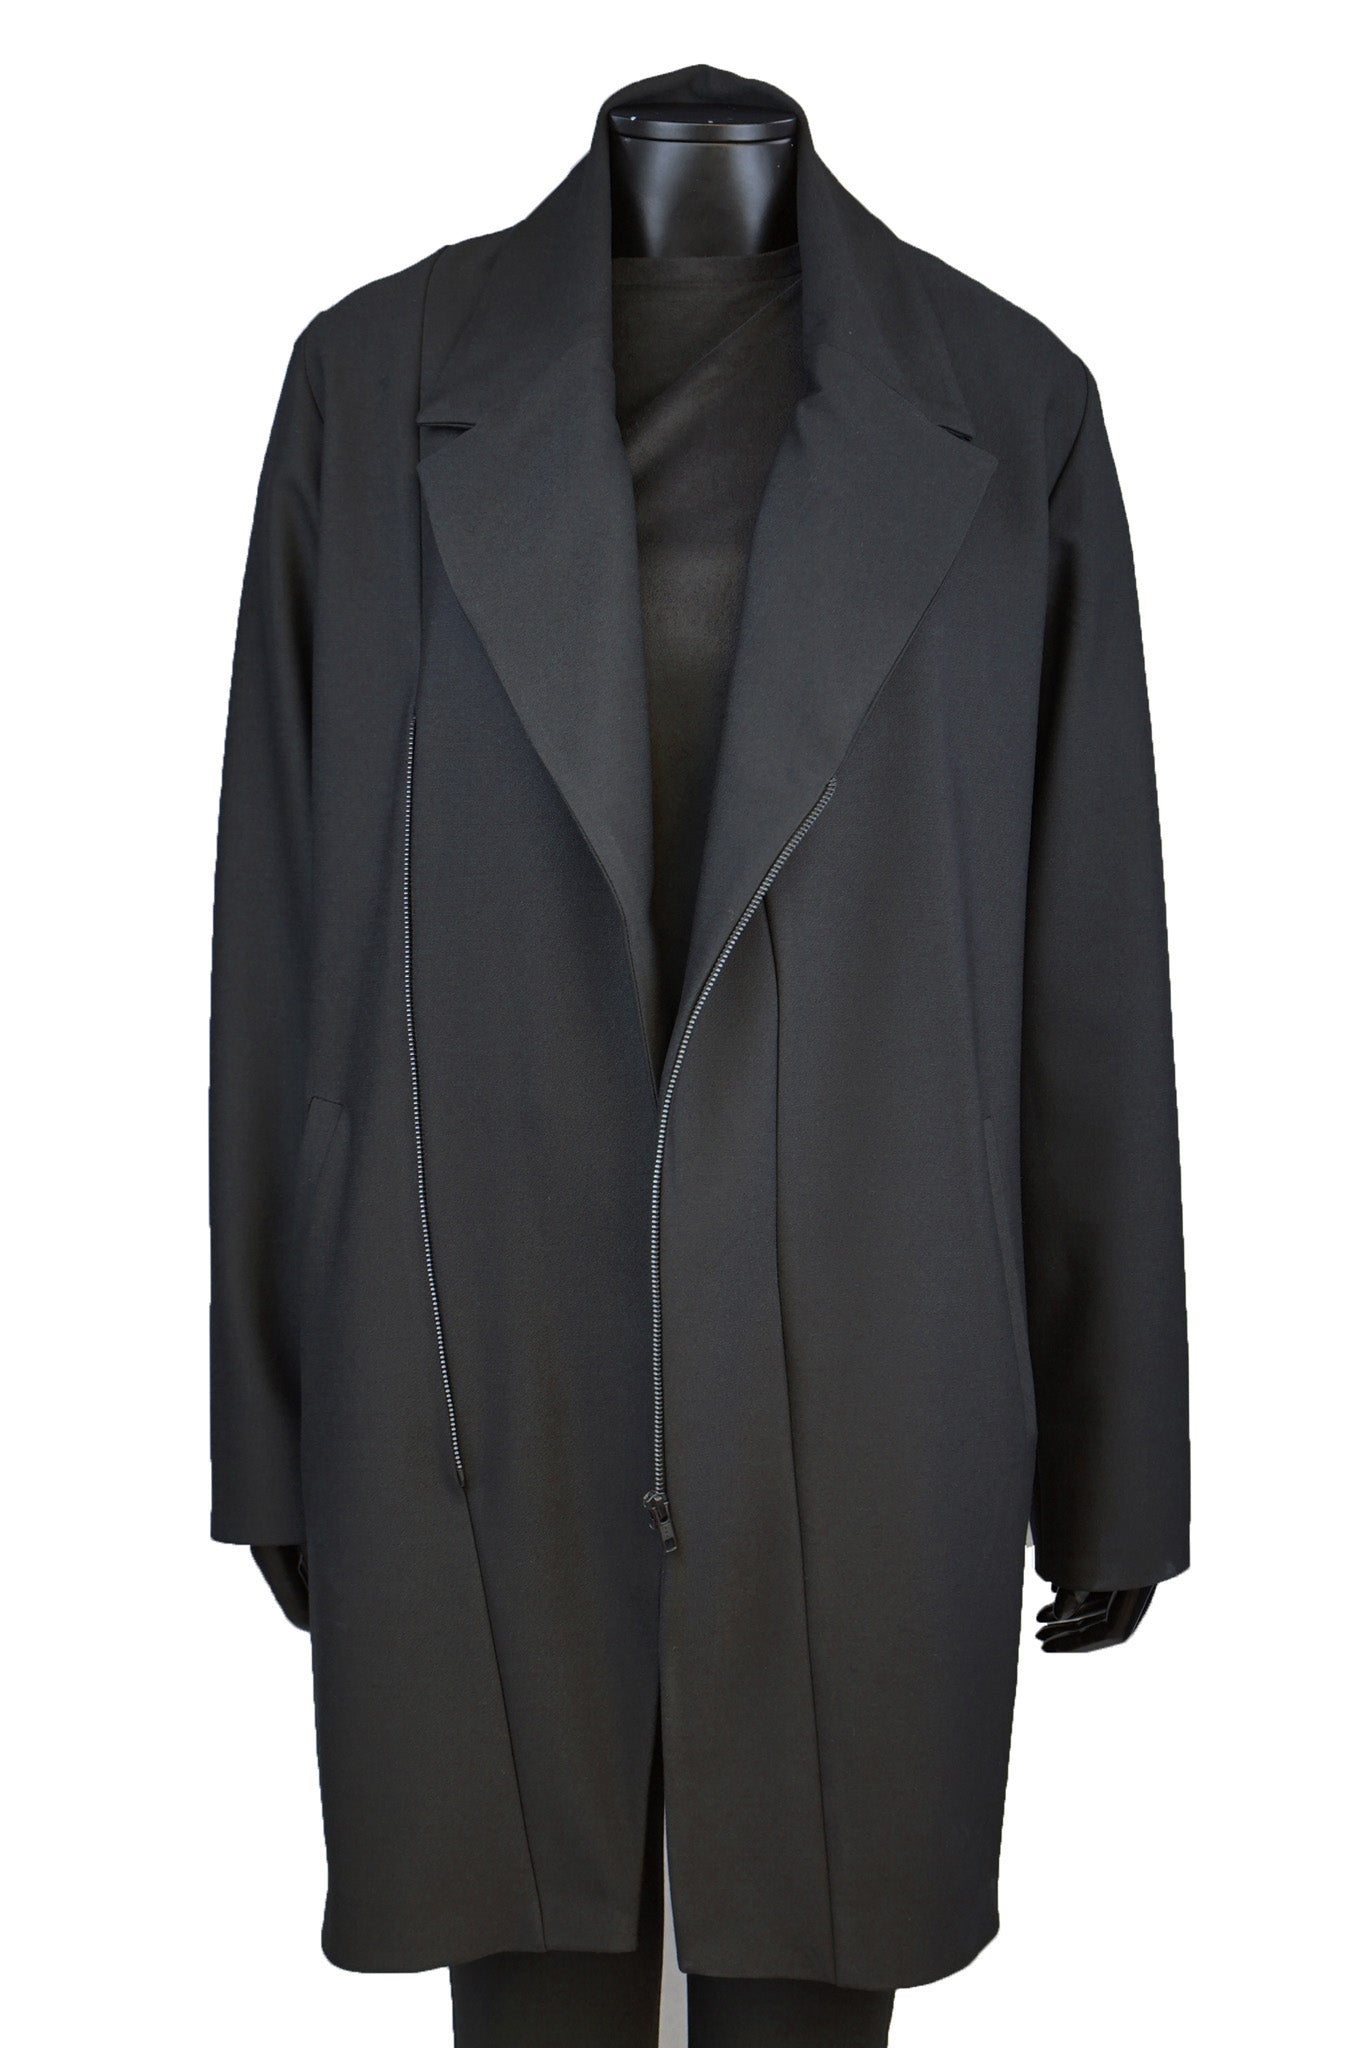 adddress MT15 asymental coat